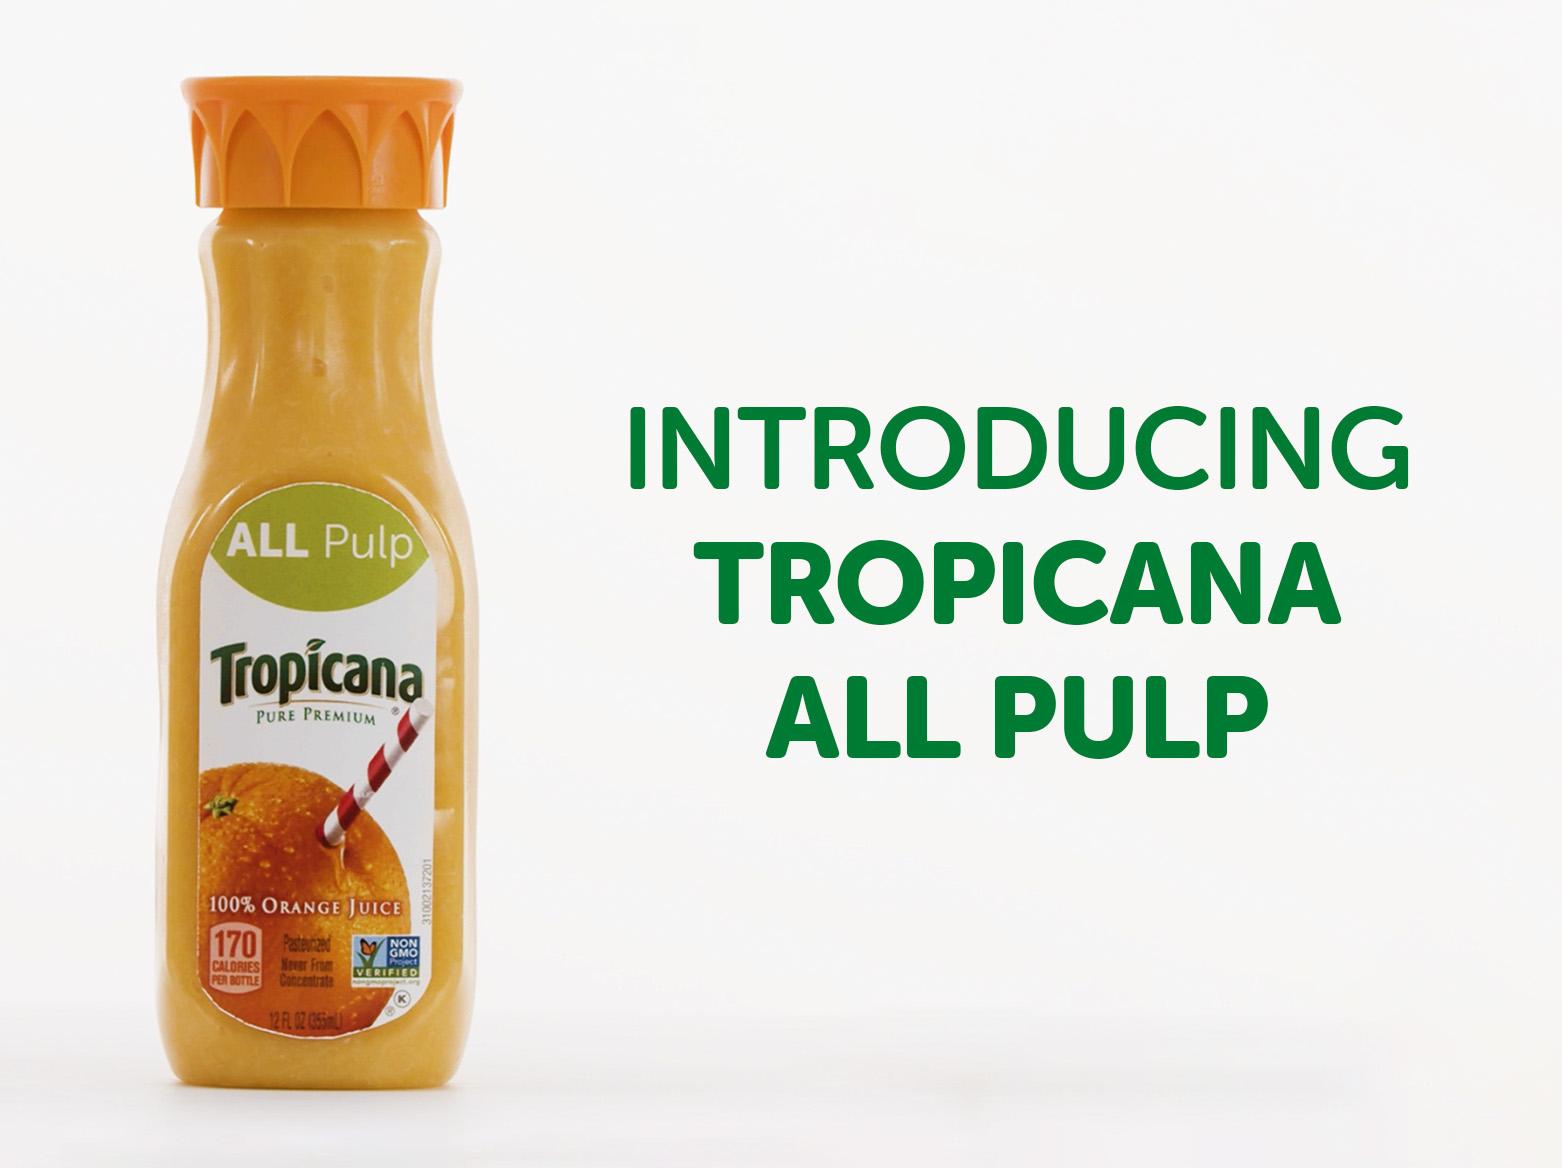 Tropicana All Pulp juice bottle